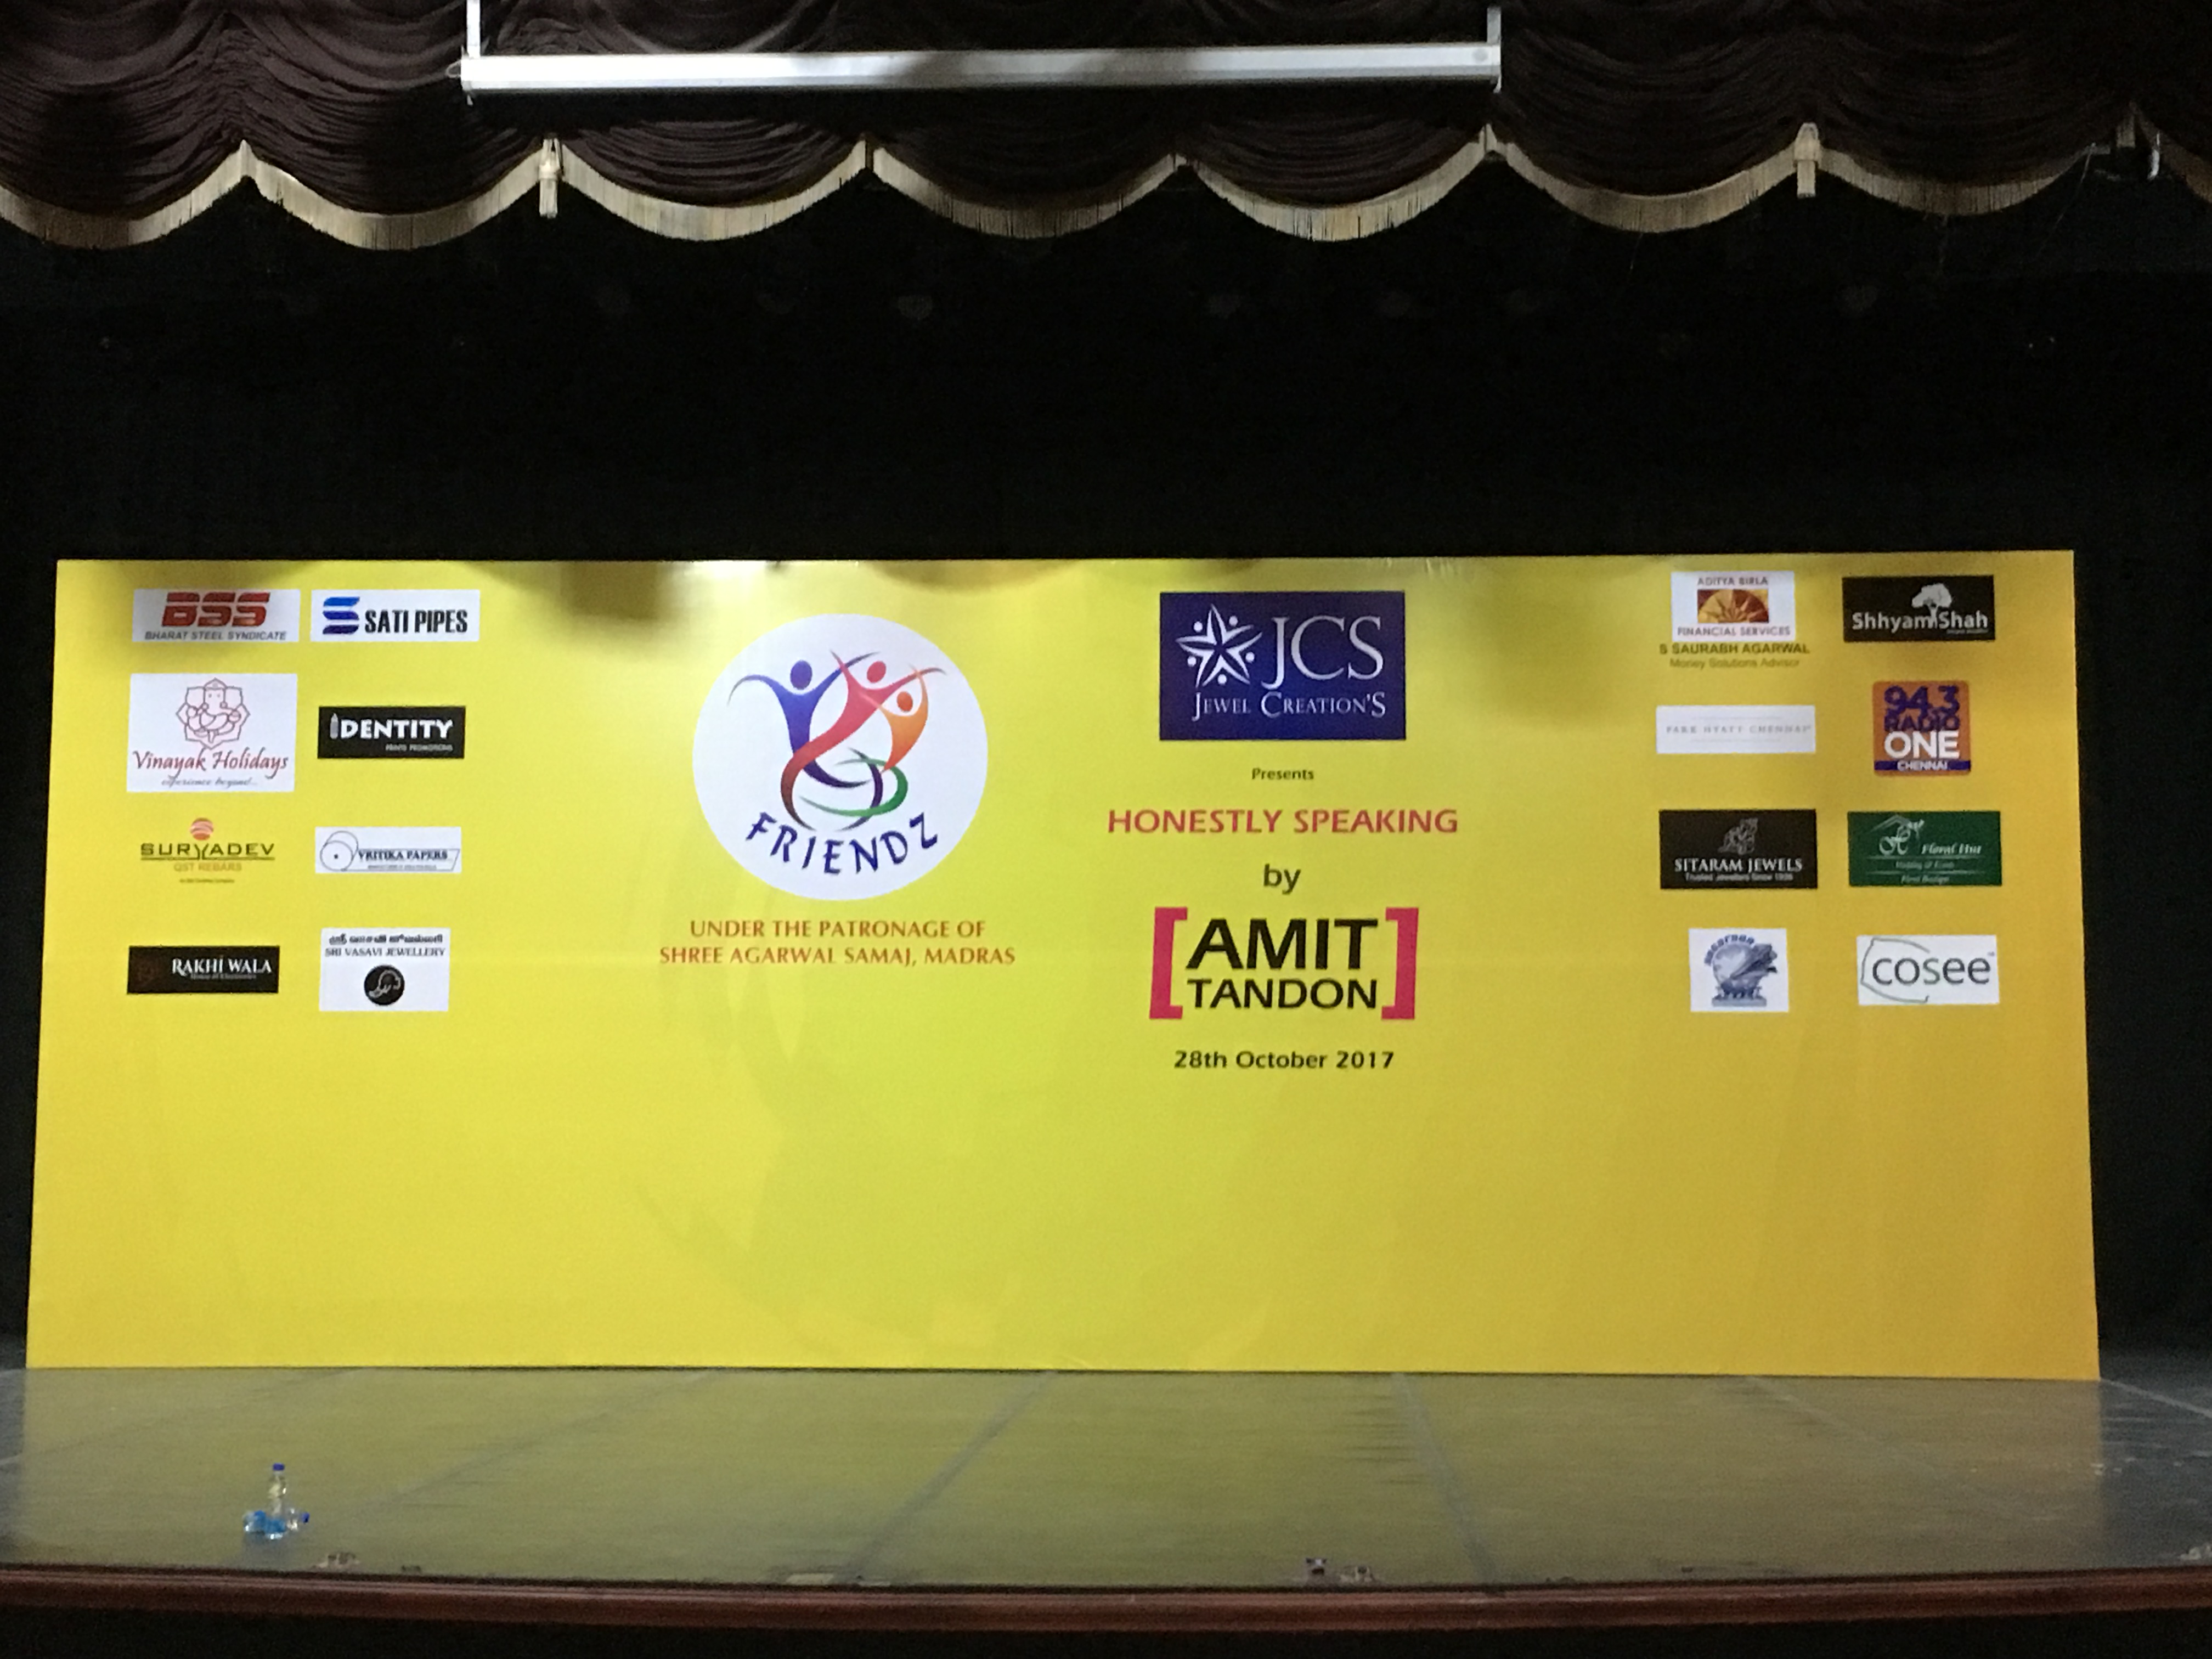 COSEE Pillows Sponsors Amit Tandon Show – Chennai